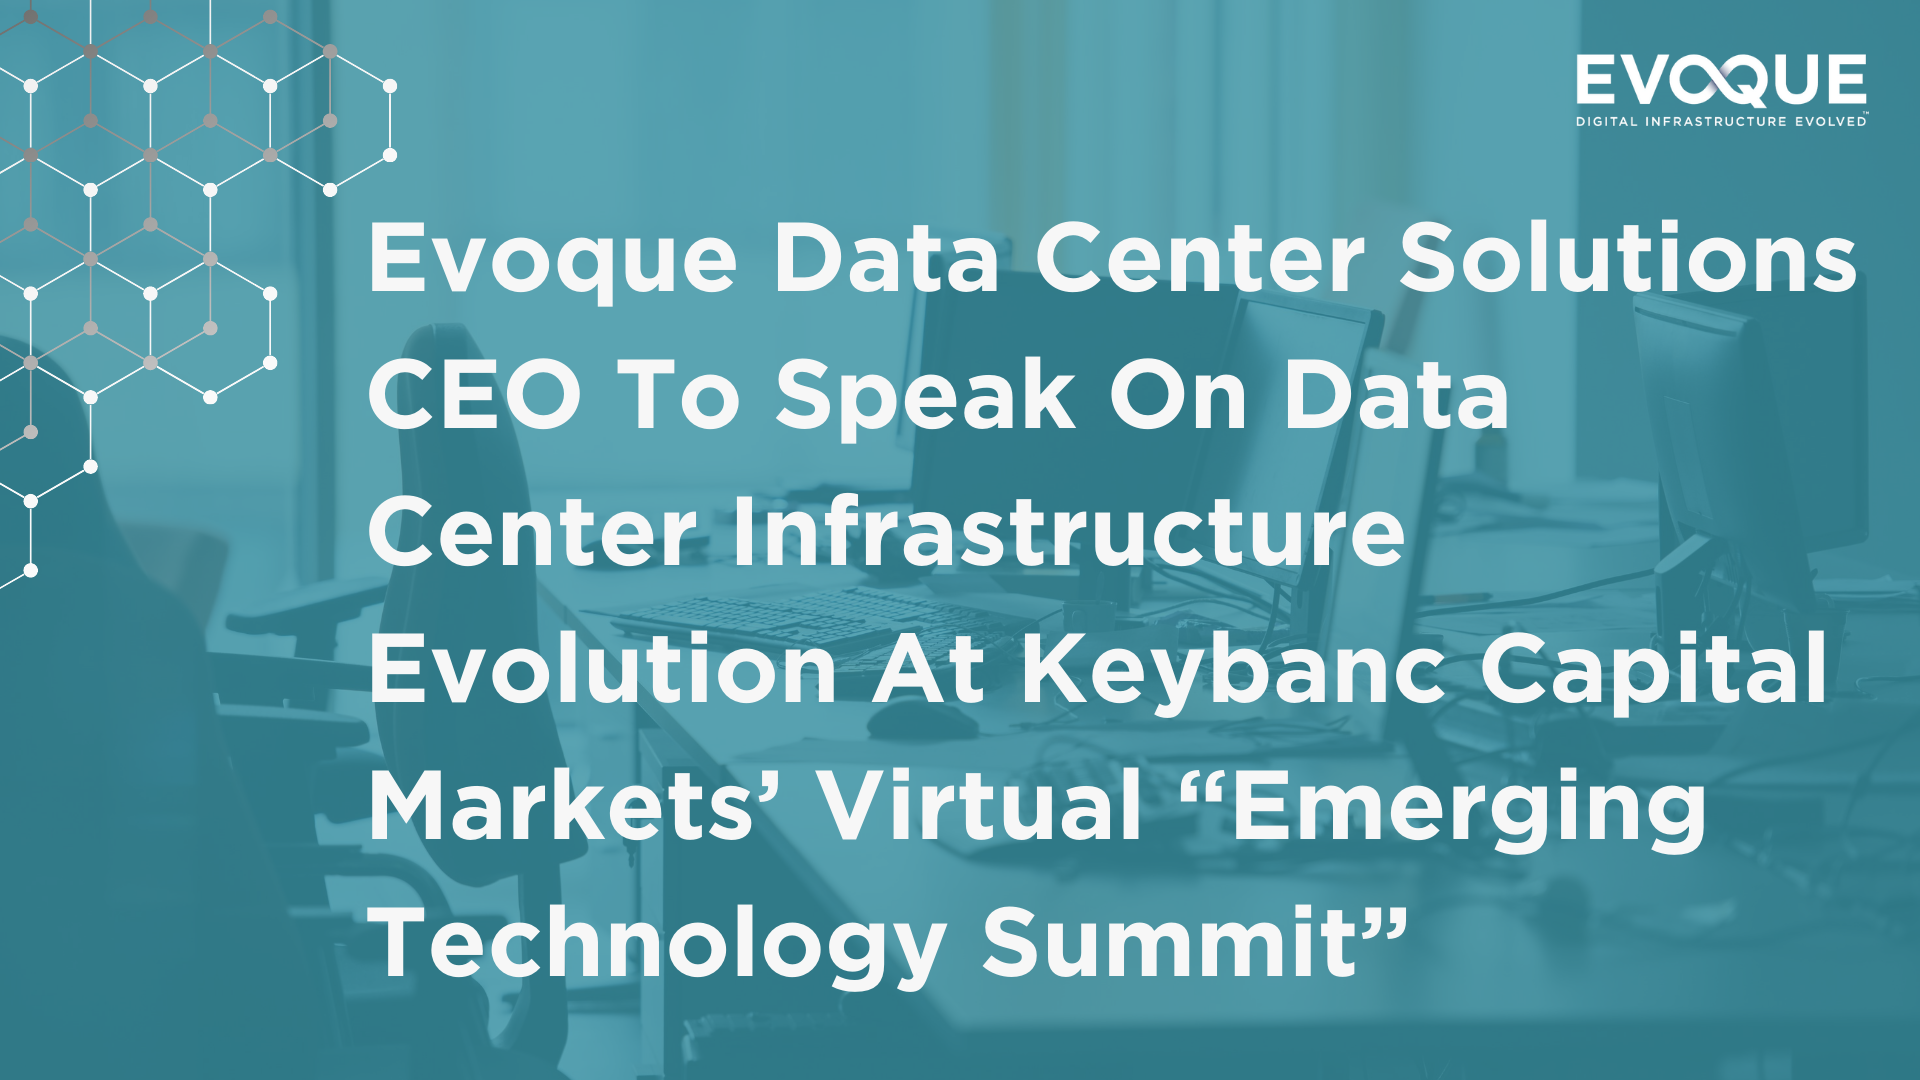 Evoque Data Center Solutions CEO To Speak On Data Center Infrastructure Evolution At Keybanc Capital Markets’ Virtual “Emerging Technology Summit”